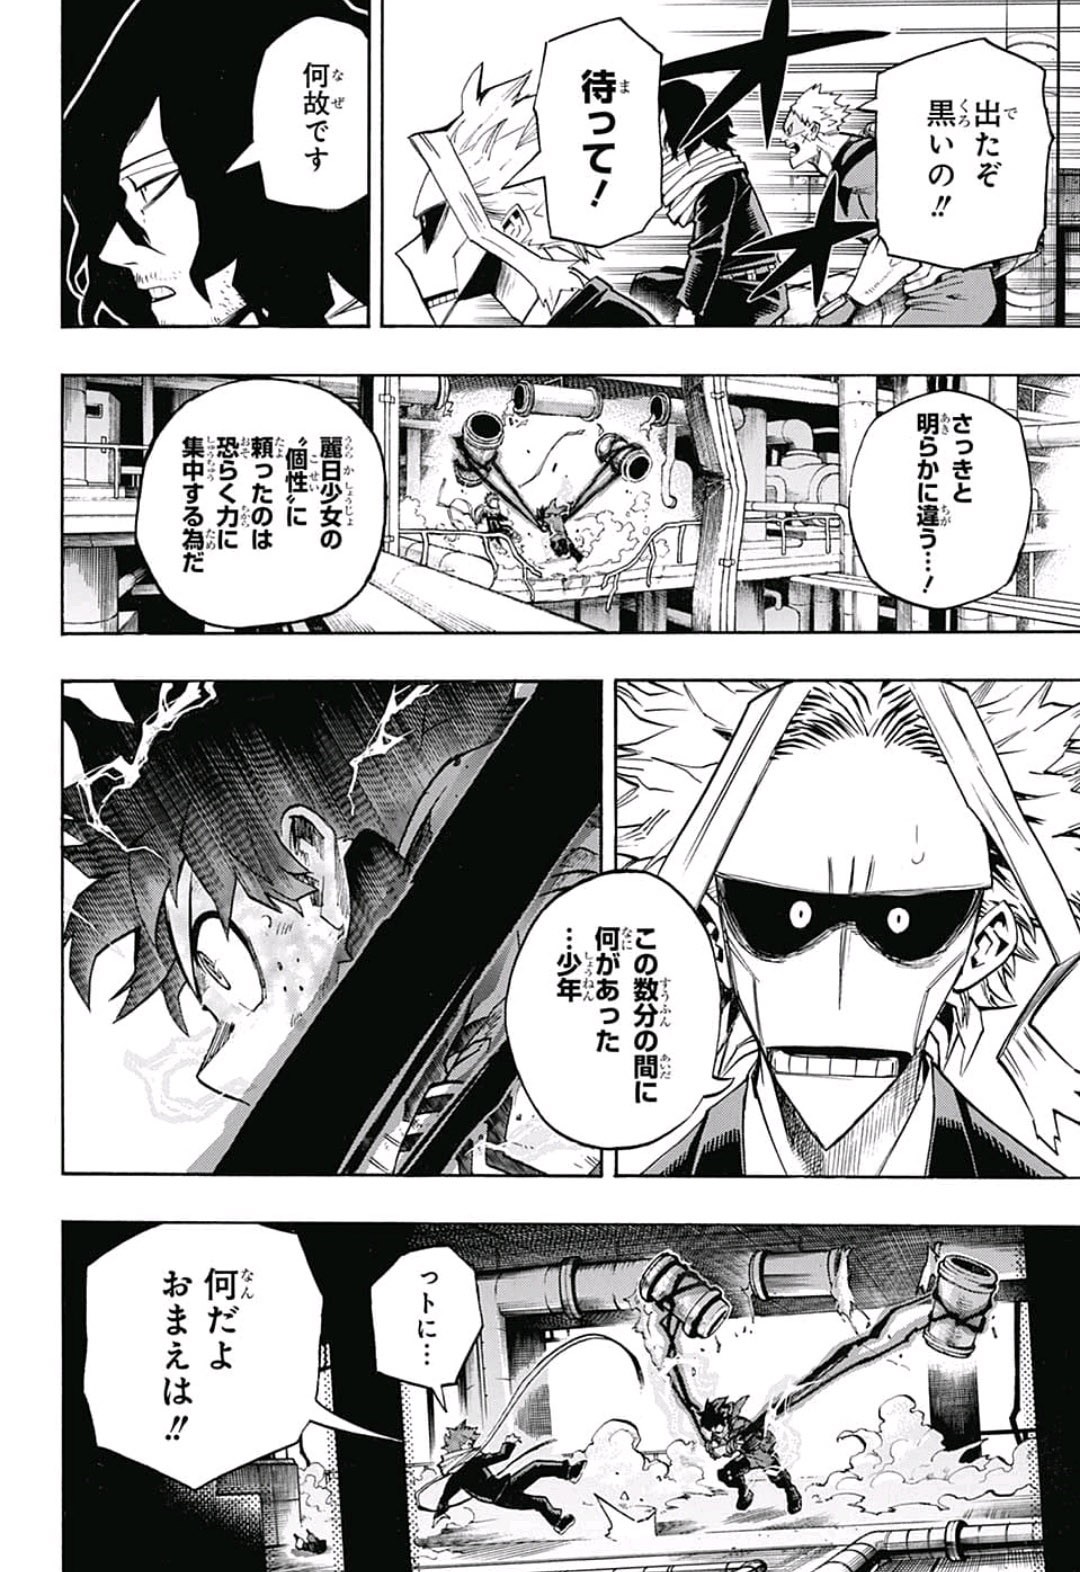 Boku no Hero Academia - Chapter 215 - Page 2